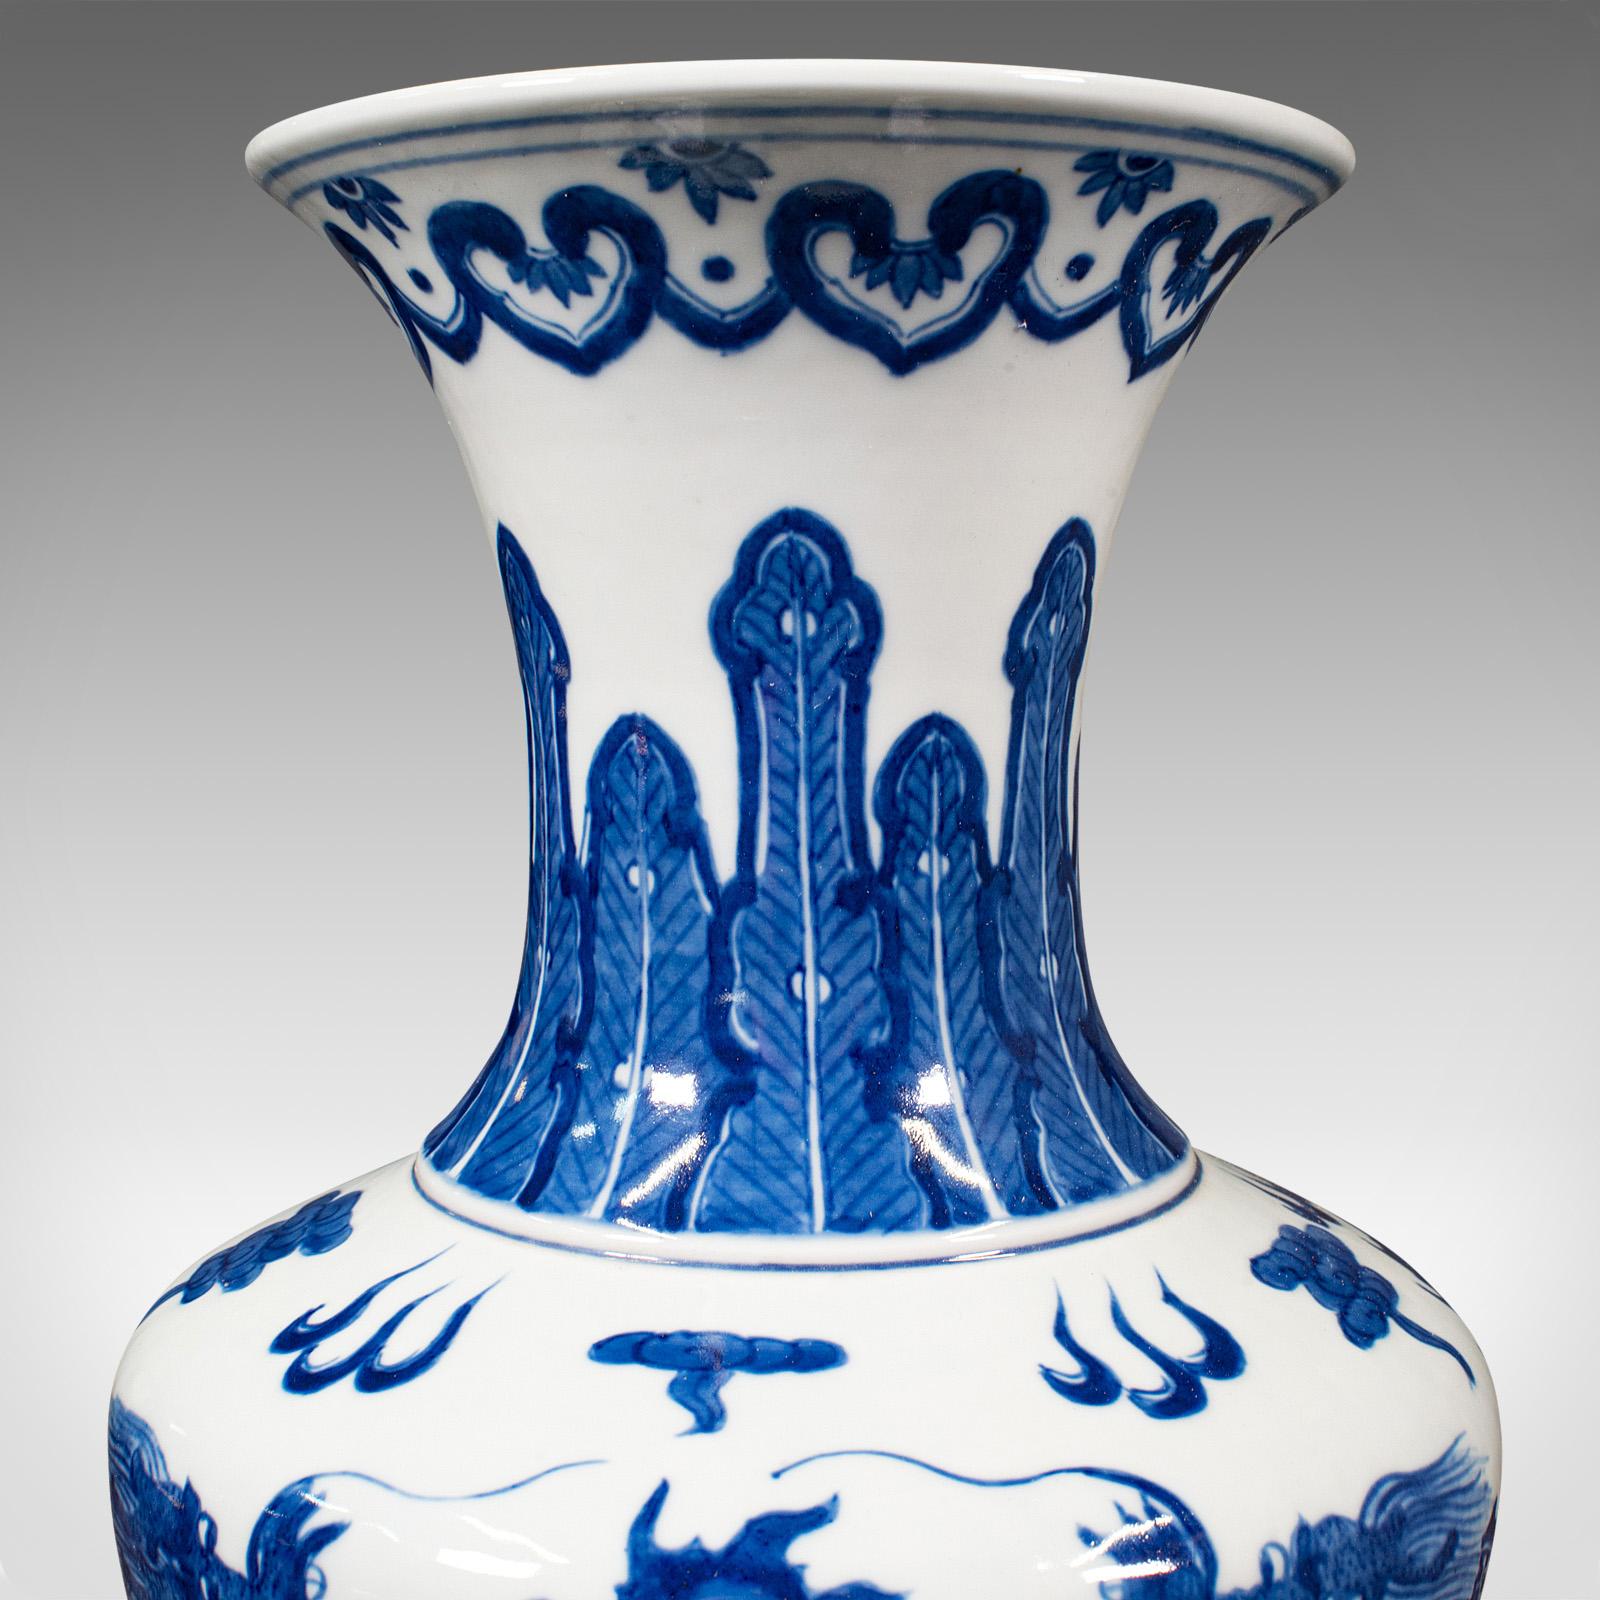 Tall Vintage White & Blue Vase, Chinese, Ceramic, Decorative, Flower, Art Deco For Sale 4